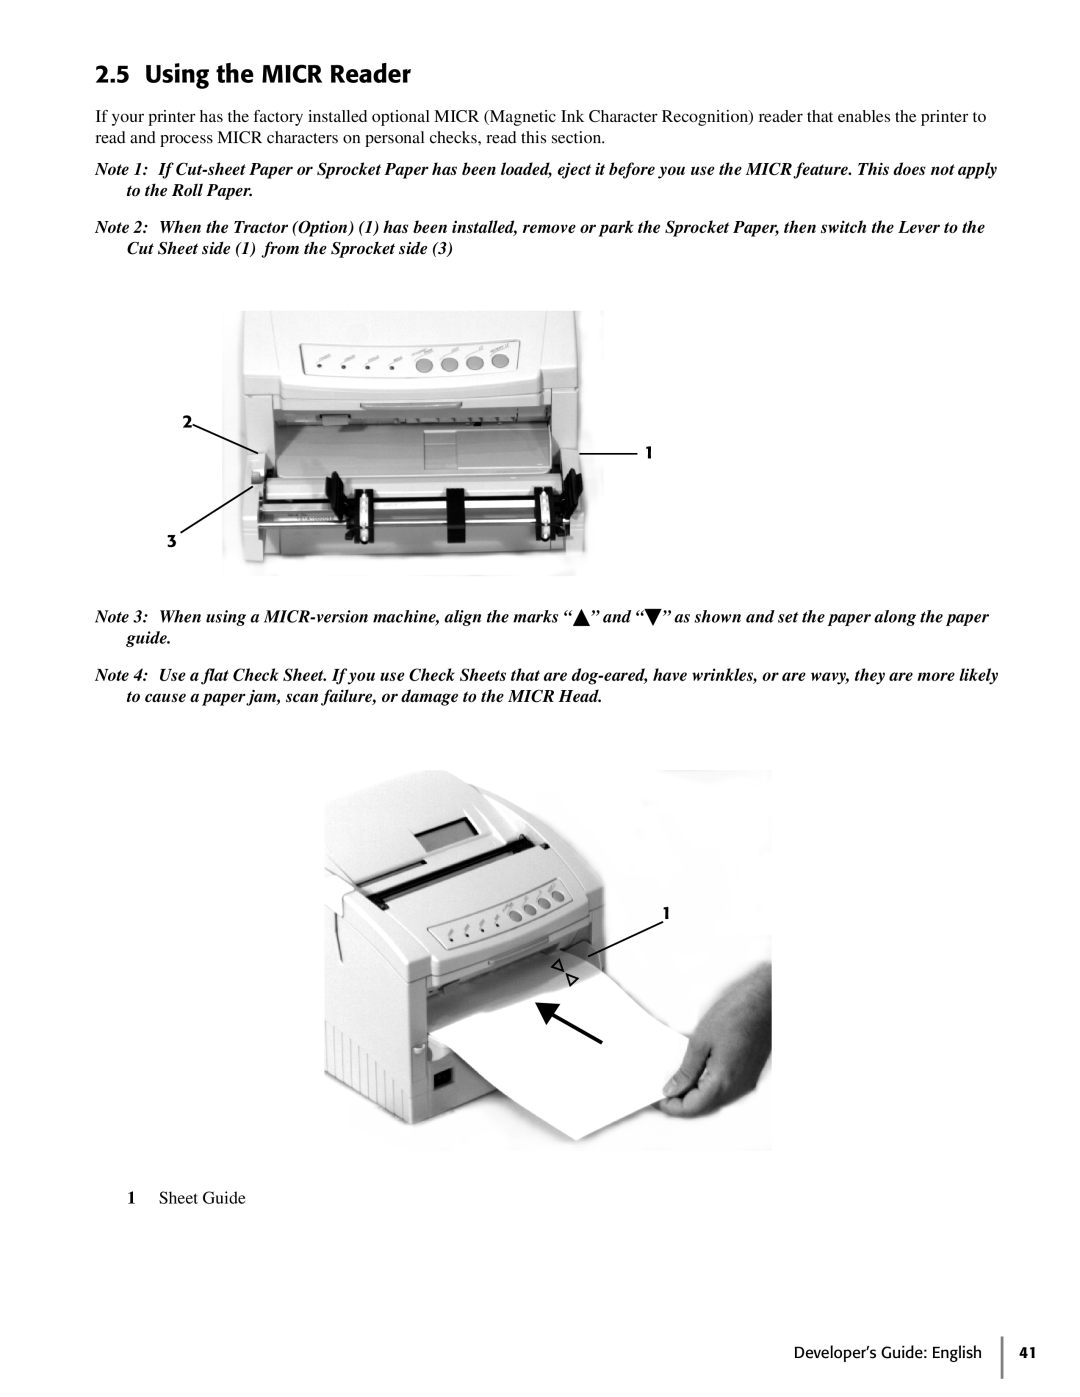 Oki 425D manual Using the MICR Reader, Sheet Guide 